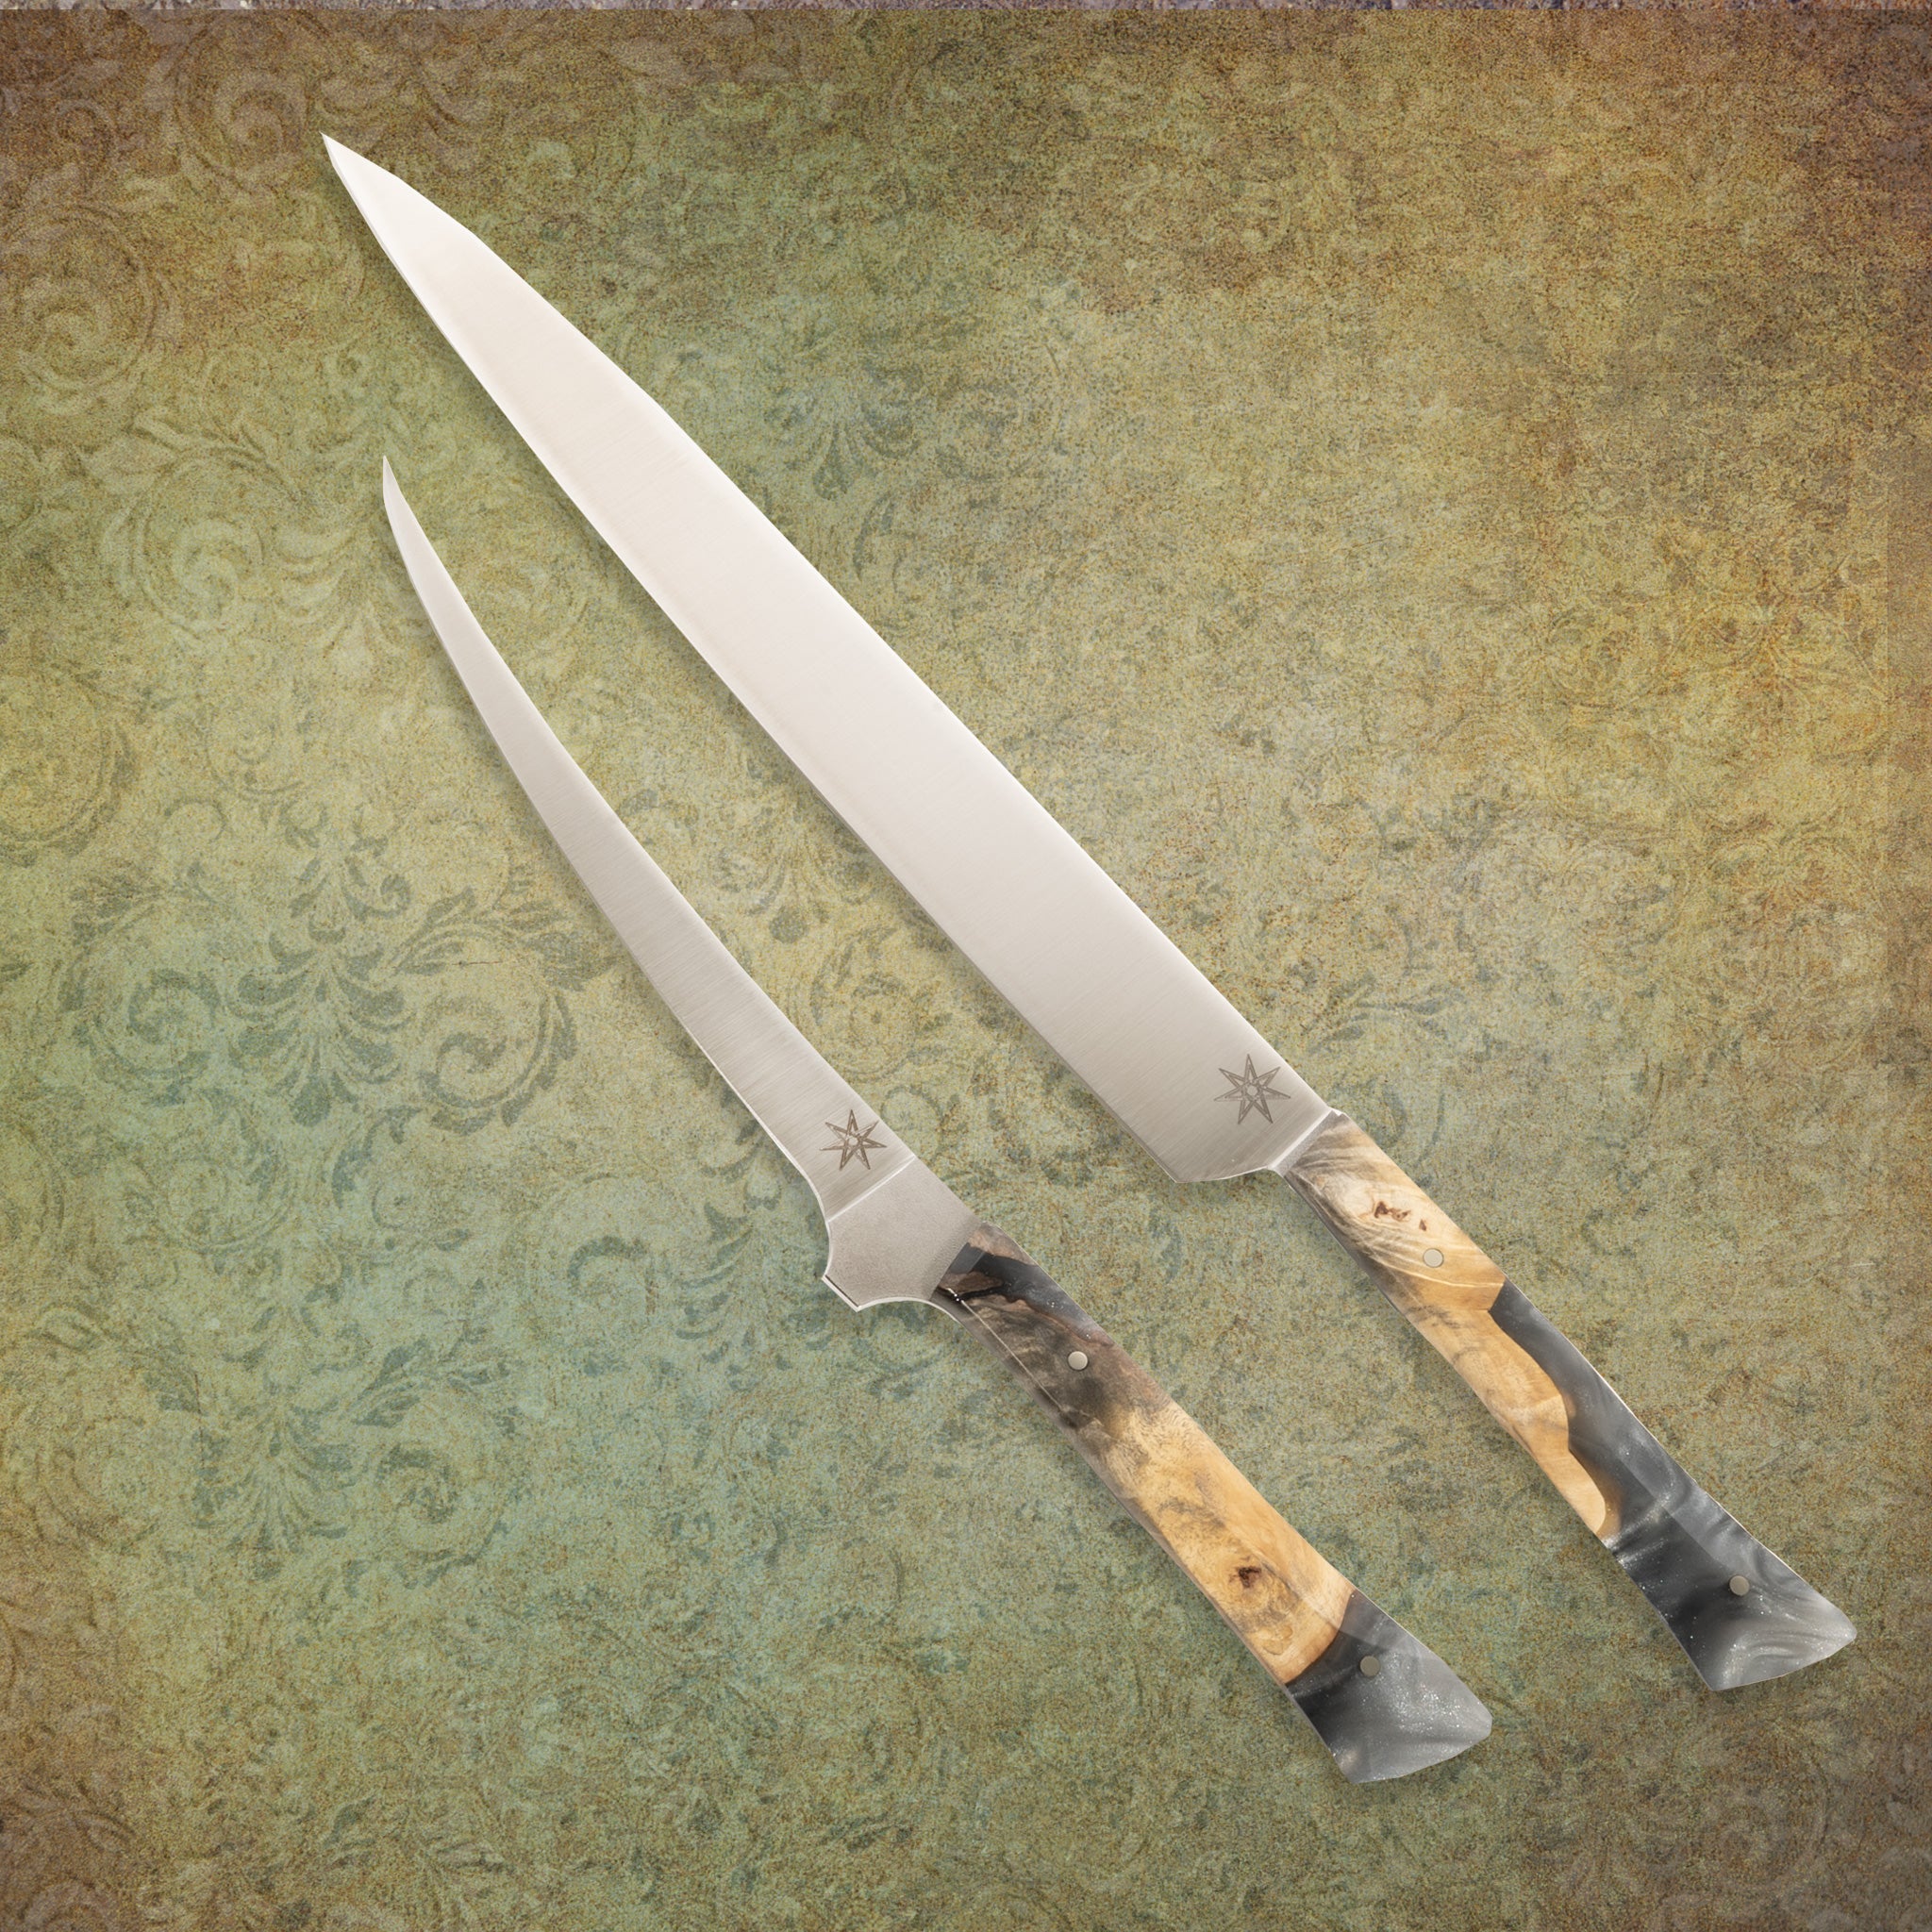 Town Cutler Ag 47 Angler Knife Set with curved boning knife and carving slicer knife.